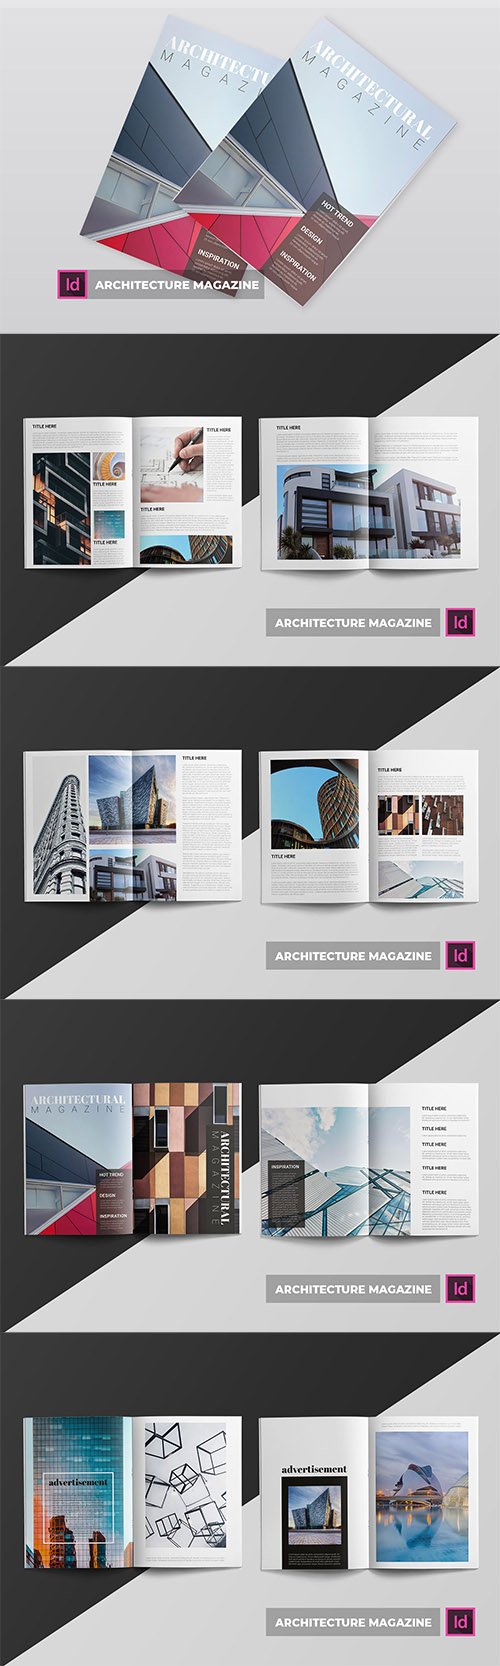 Architecture | Magazine Template Indesign